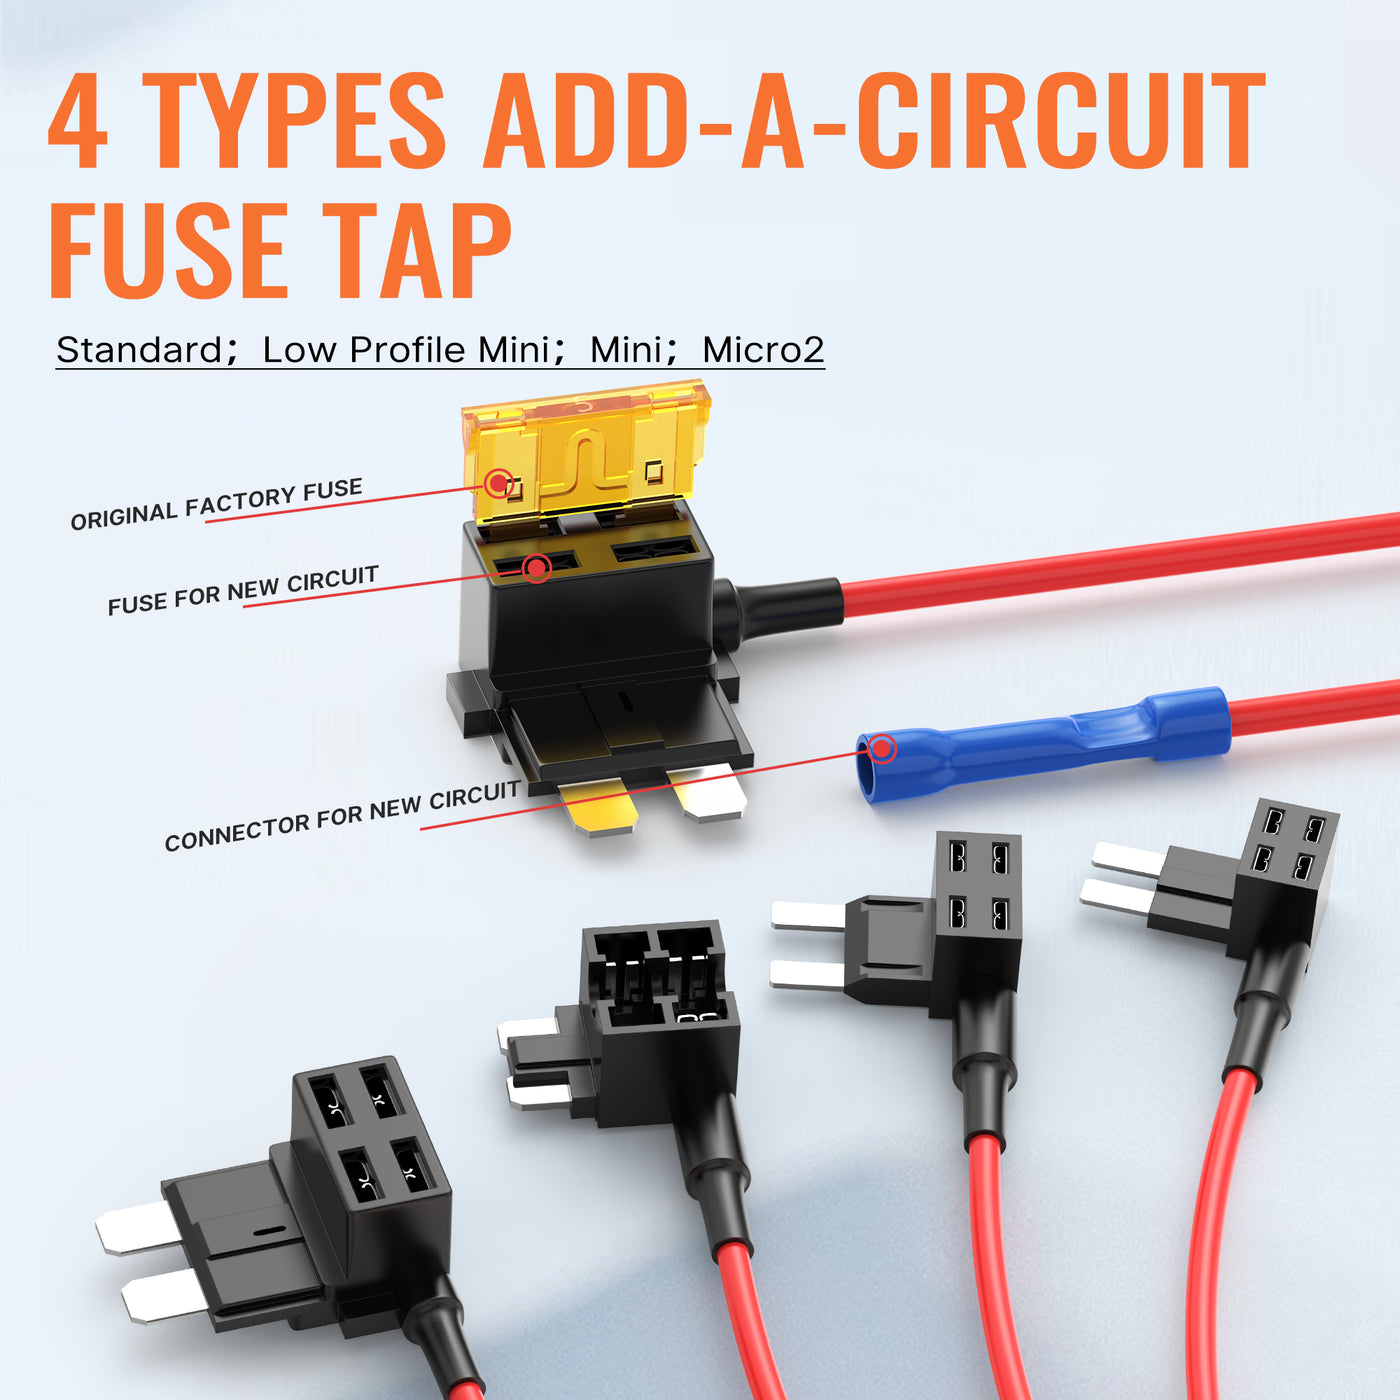 QSABC 4 Type Add-a-Circuit Fuse Tap